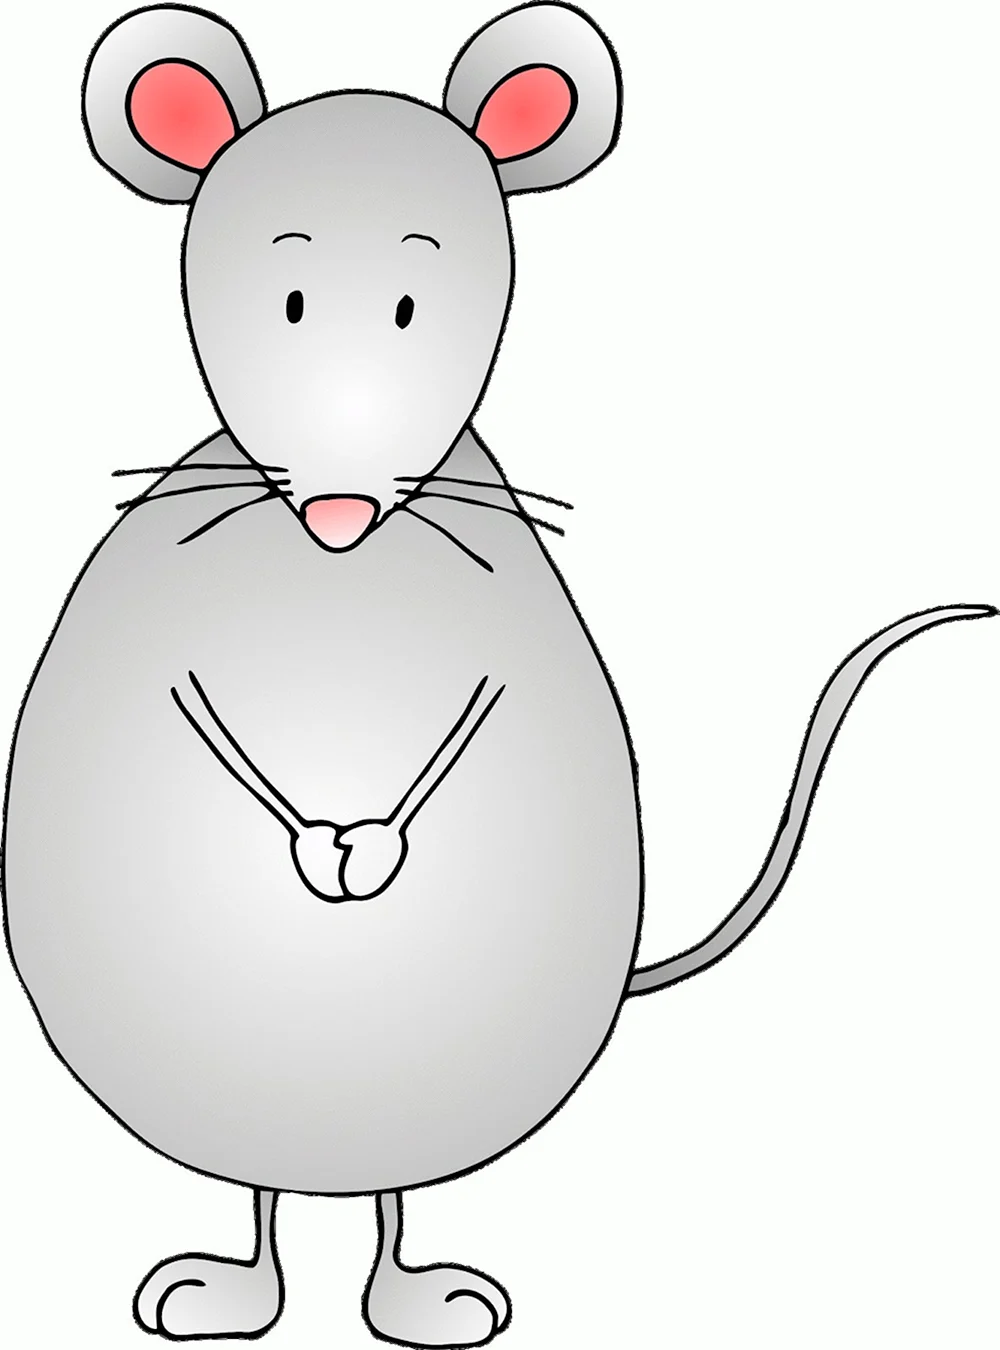 Мышка рисунок